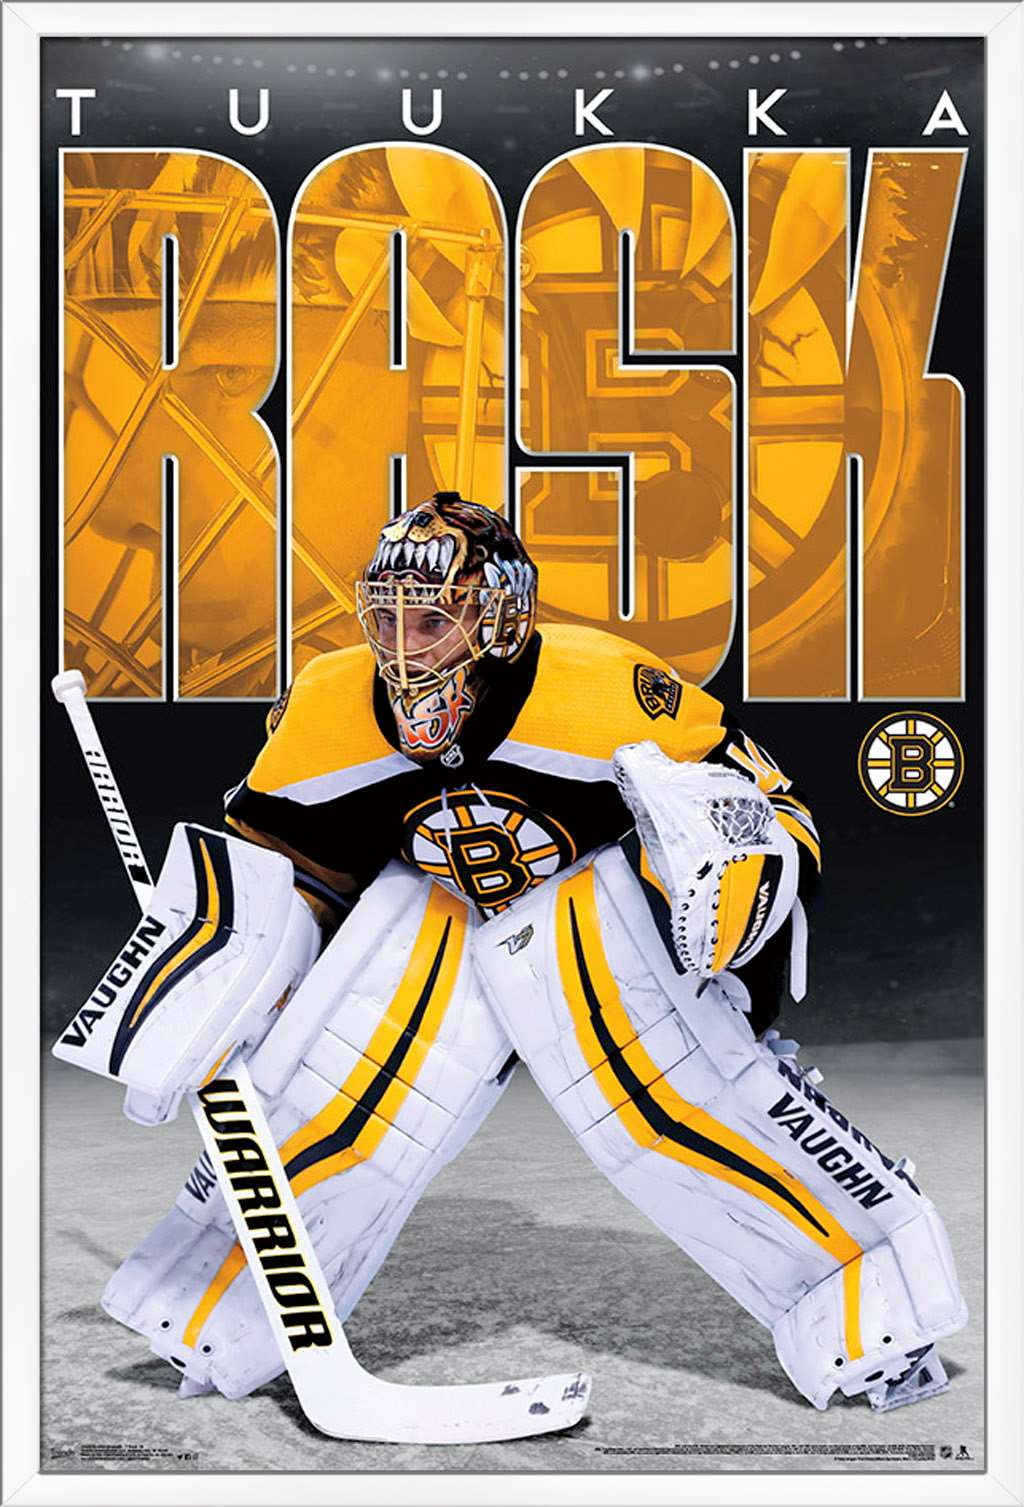 NHL Boston Bruins - Tuukka Rask 18 Wall Poster, 22.375 x 34 